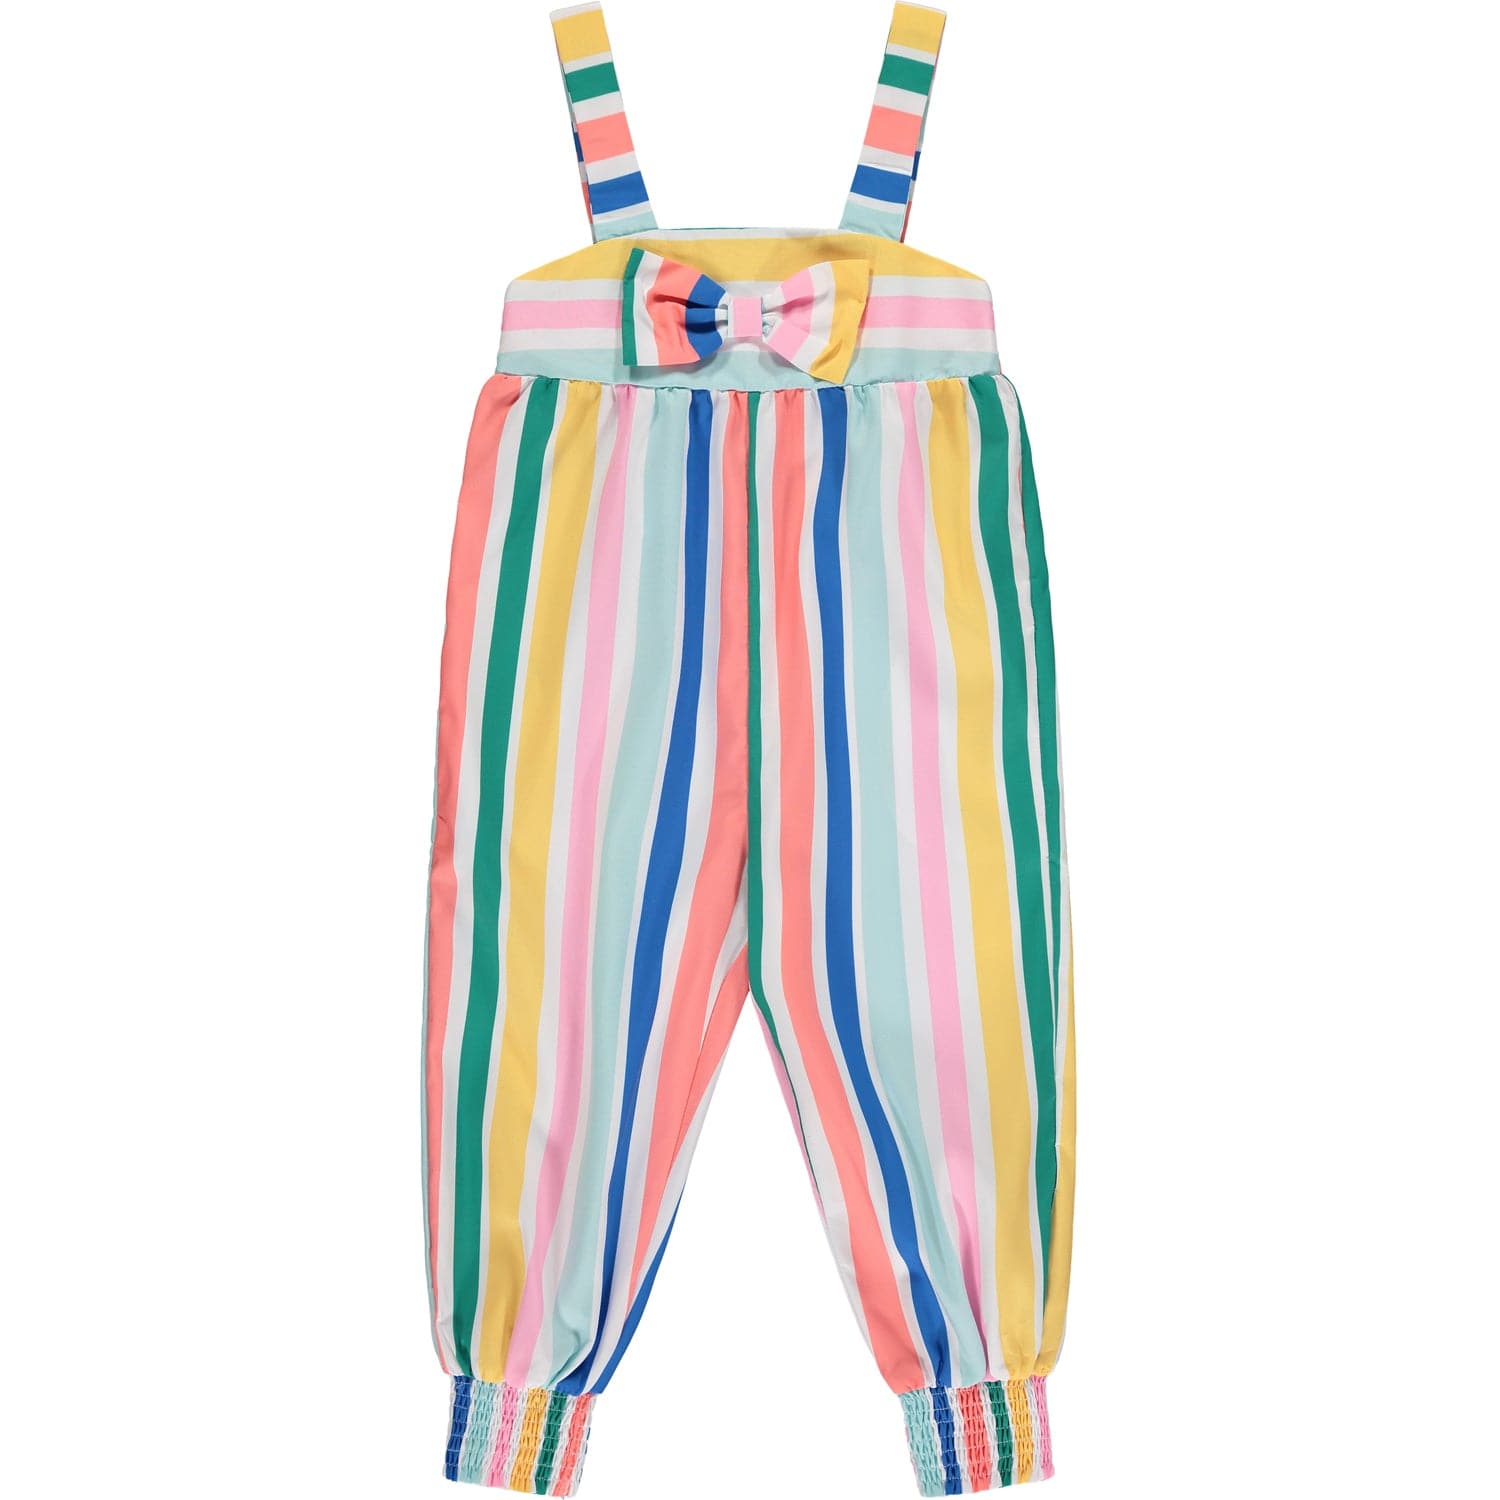 A DEE - Ursula La Isla Bonita Jumpsuit Set - Stripe